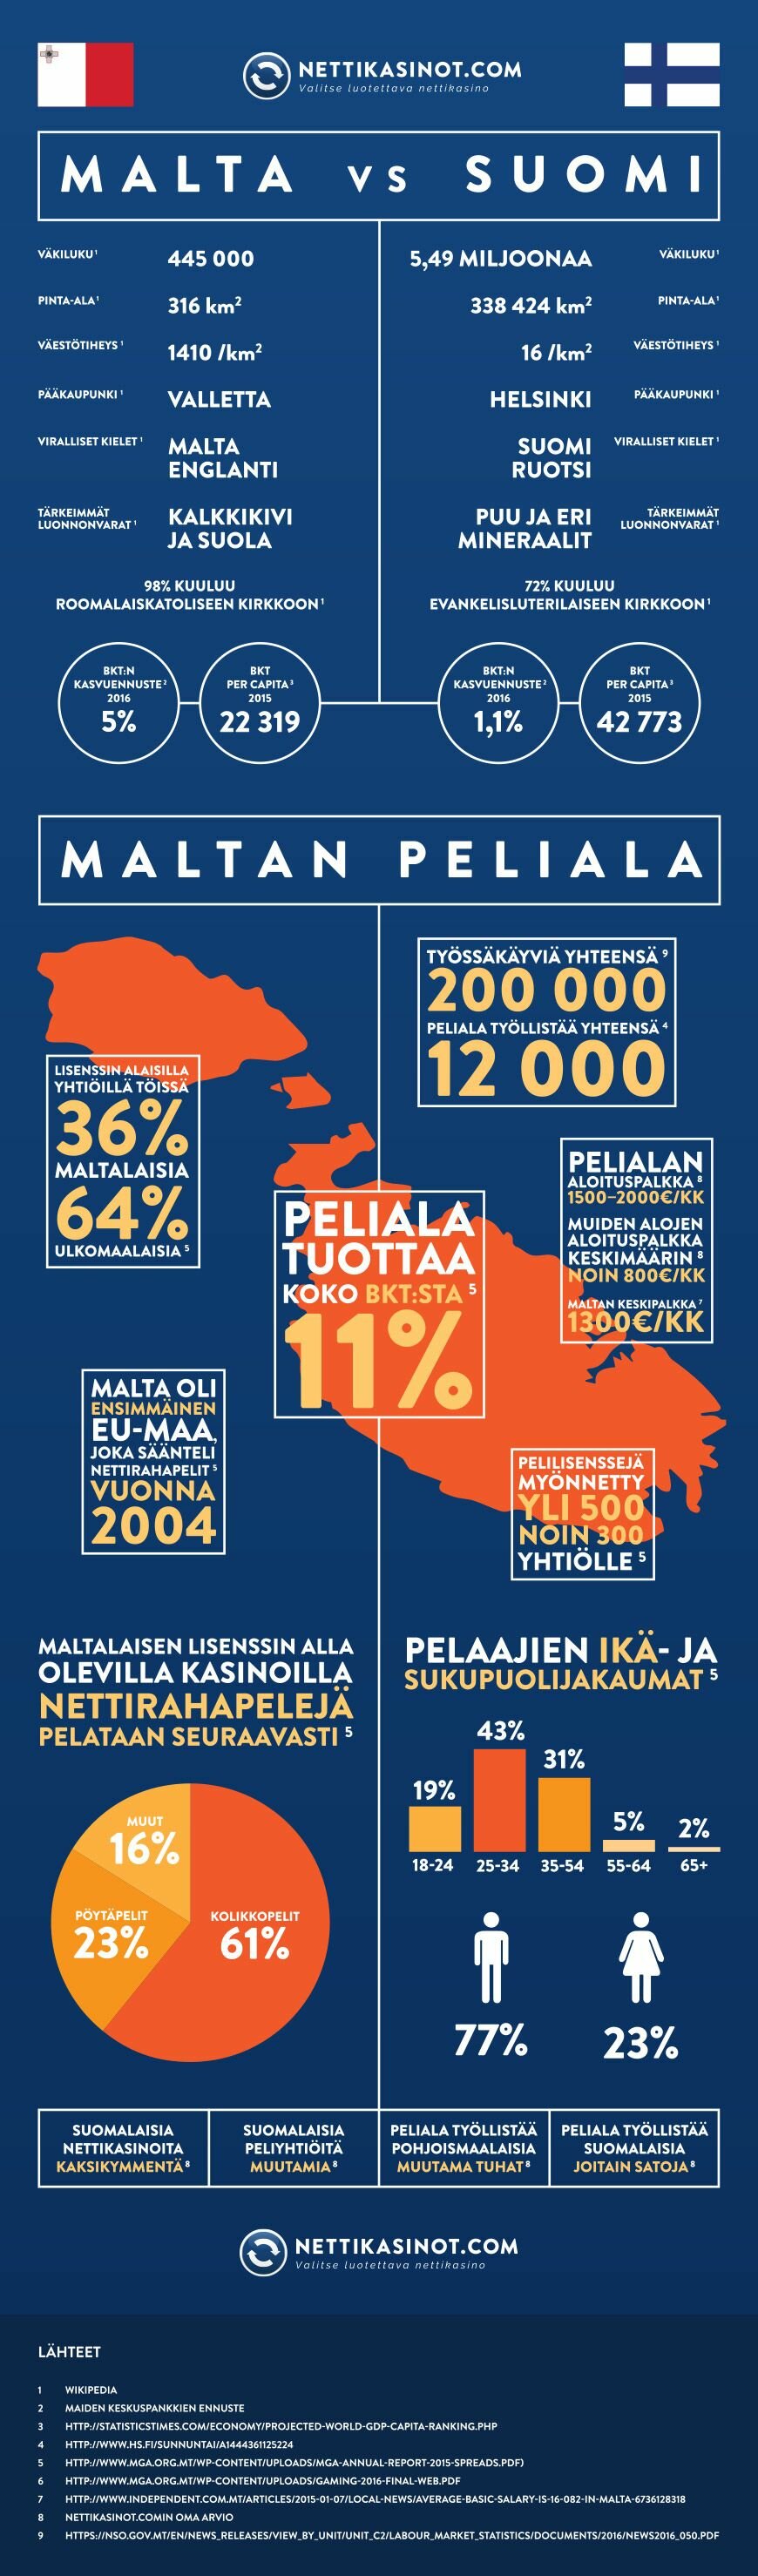 maltan_peliala_infograf_c